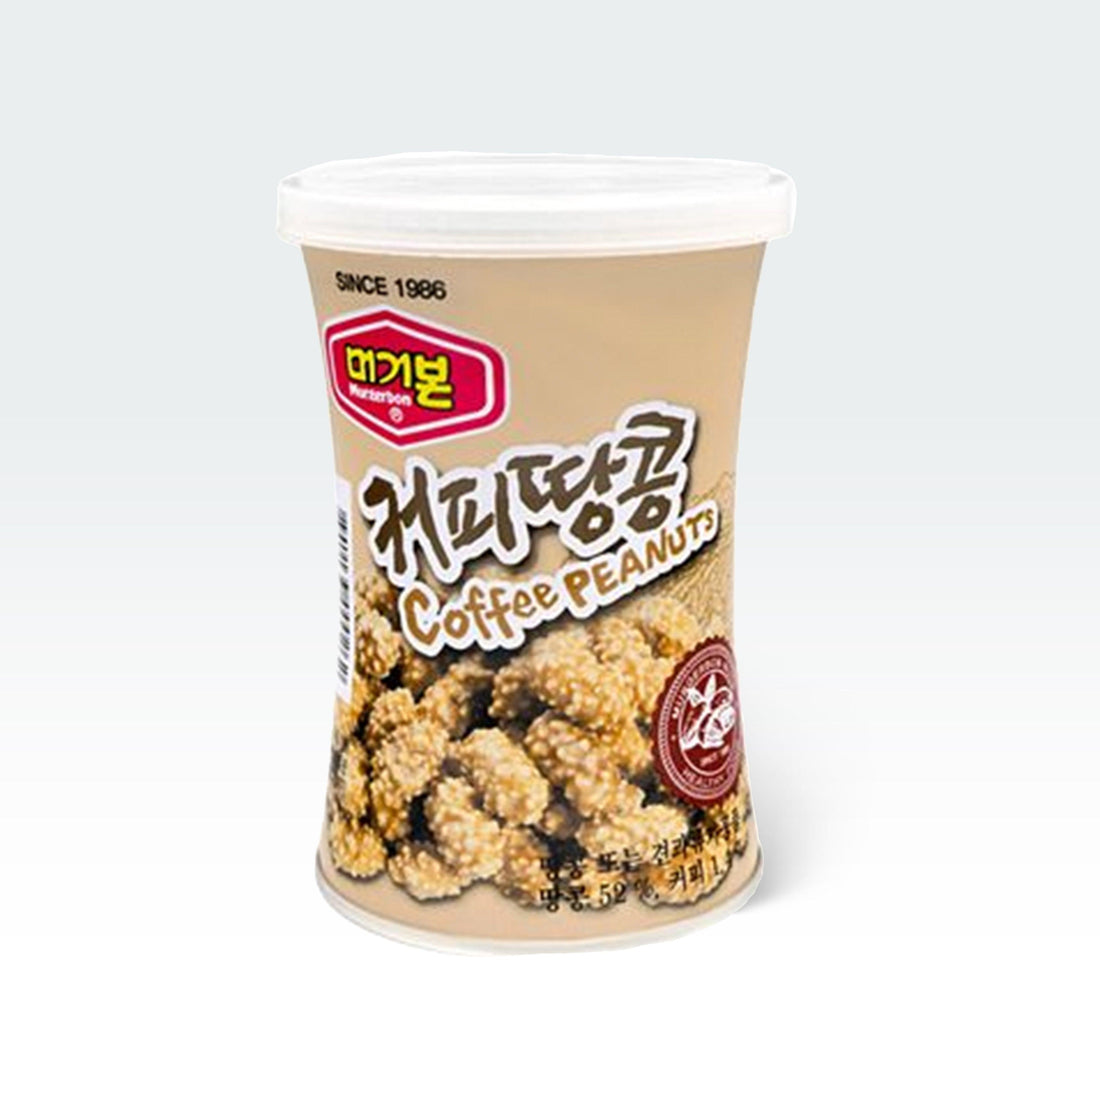 Murgerbon Coffee Peanuts 4.6oz(130g) - Anytime Basket